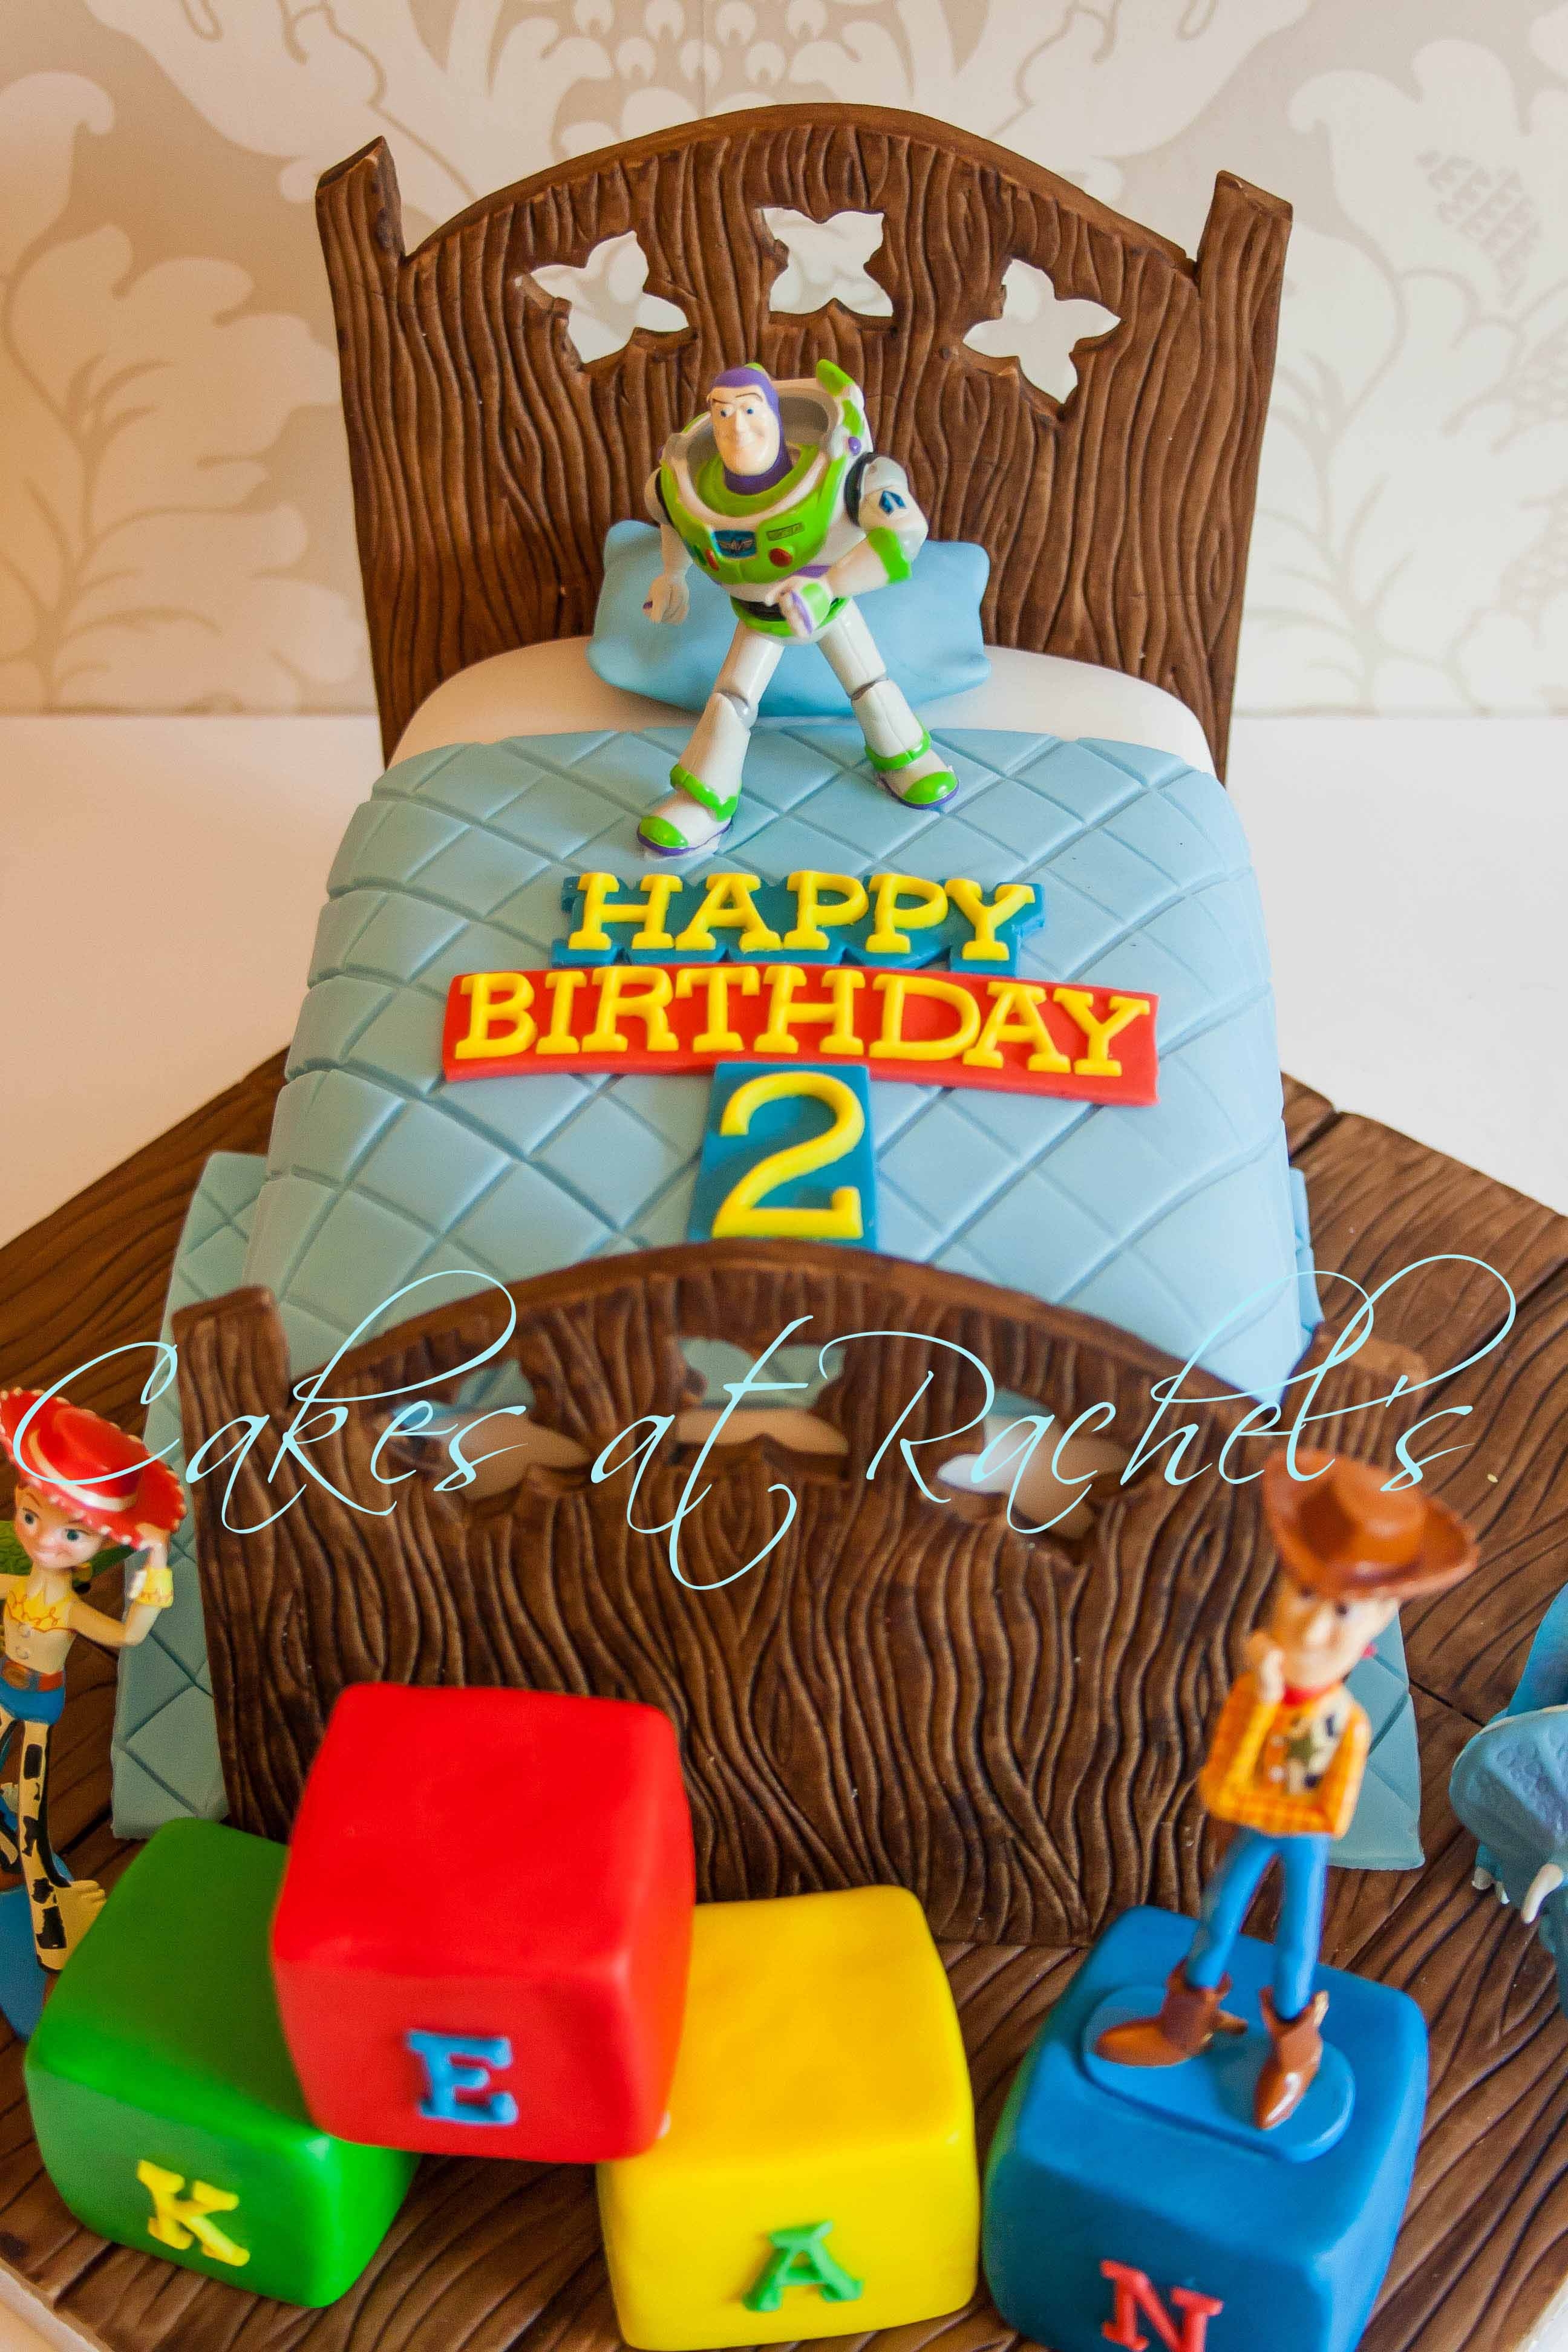 Toy Story Birthday Cakes for Boys